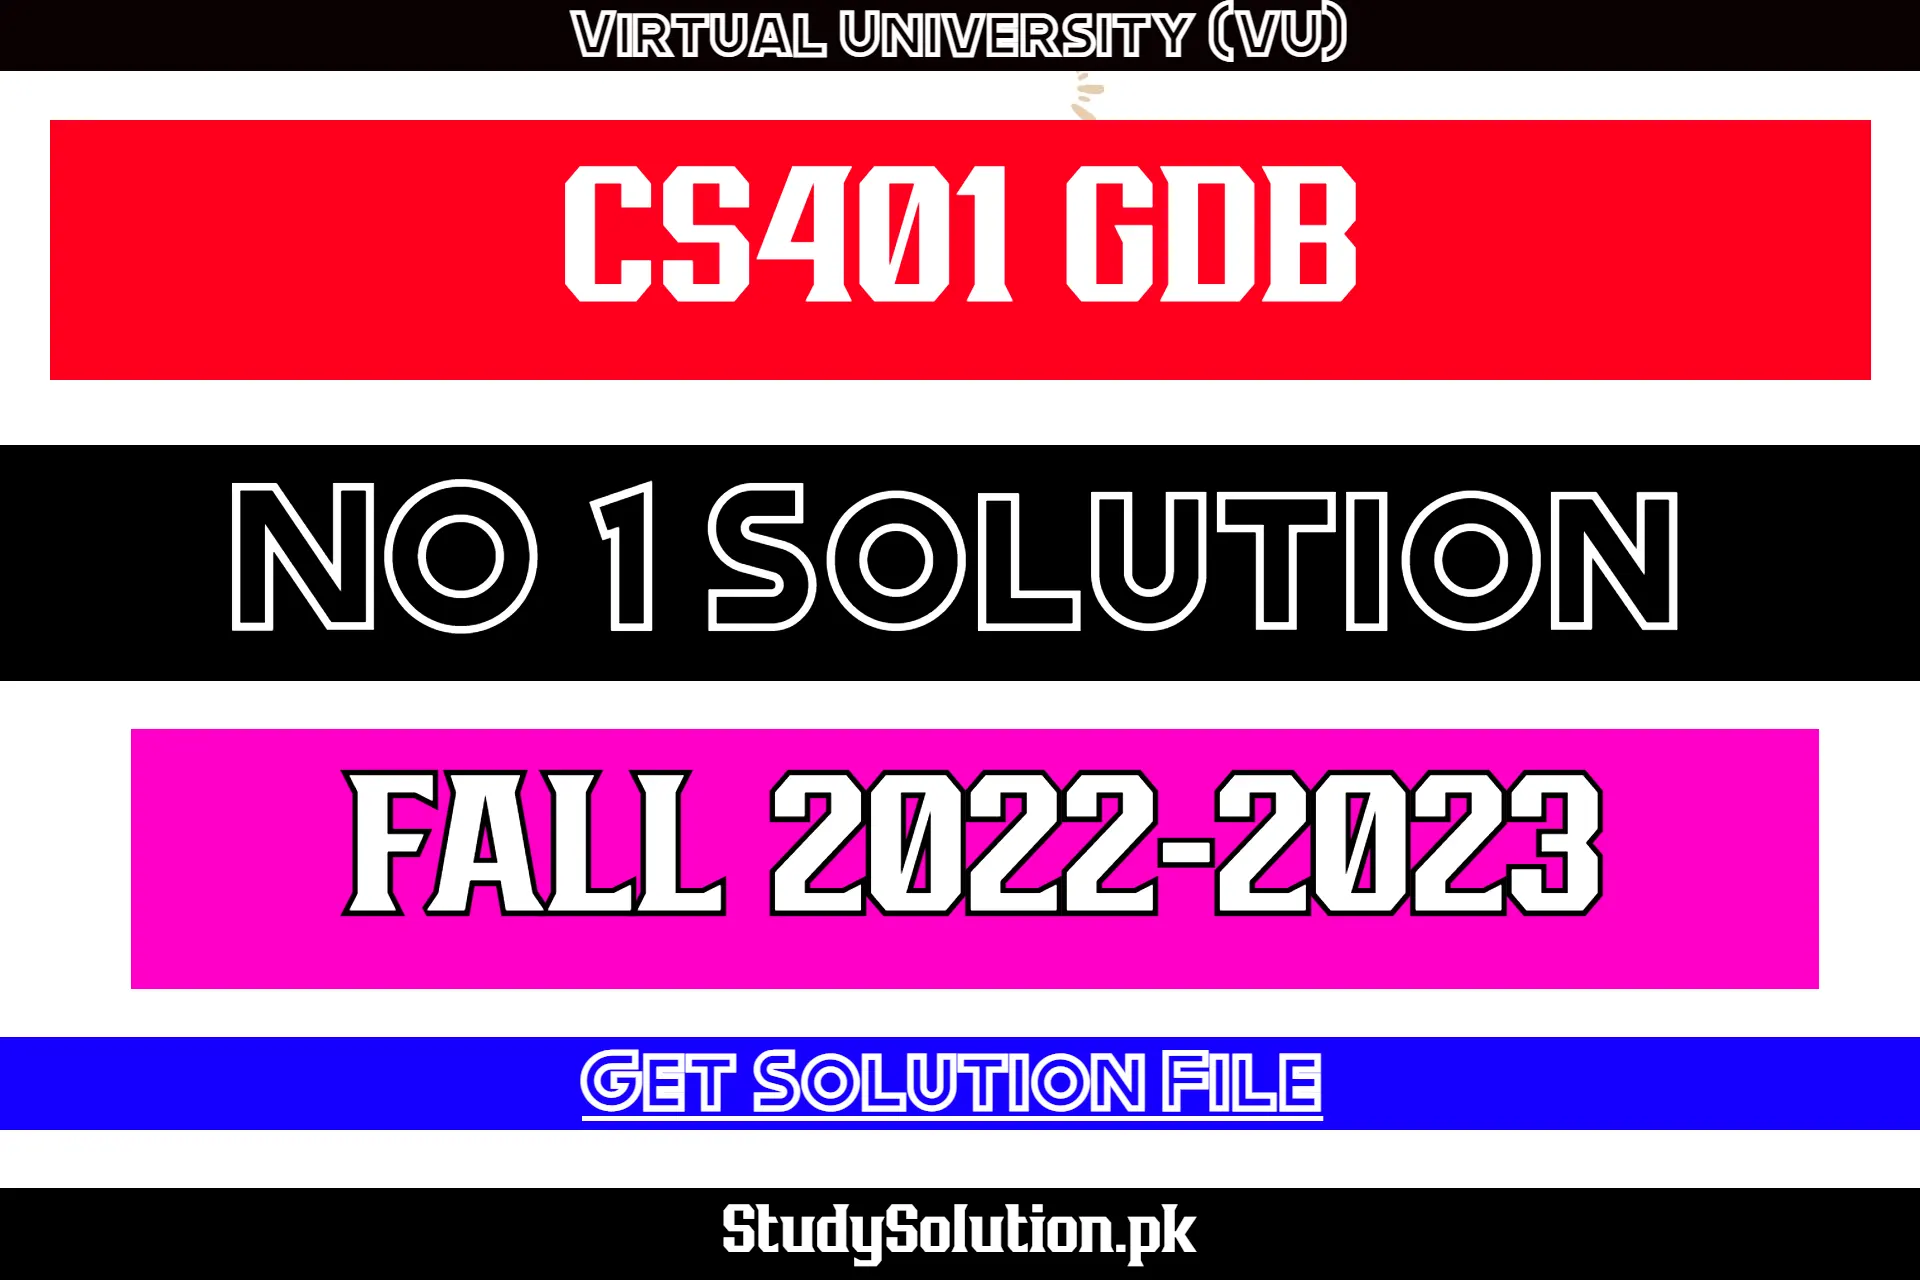 CS401 GDB No 1 Solution Fall 2022